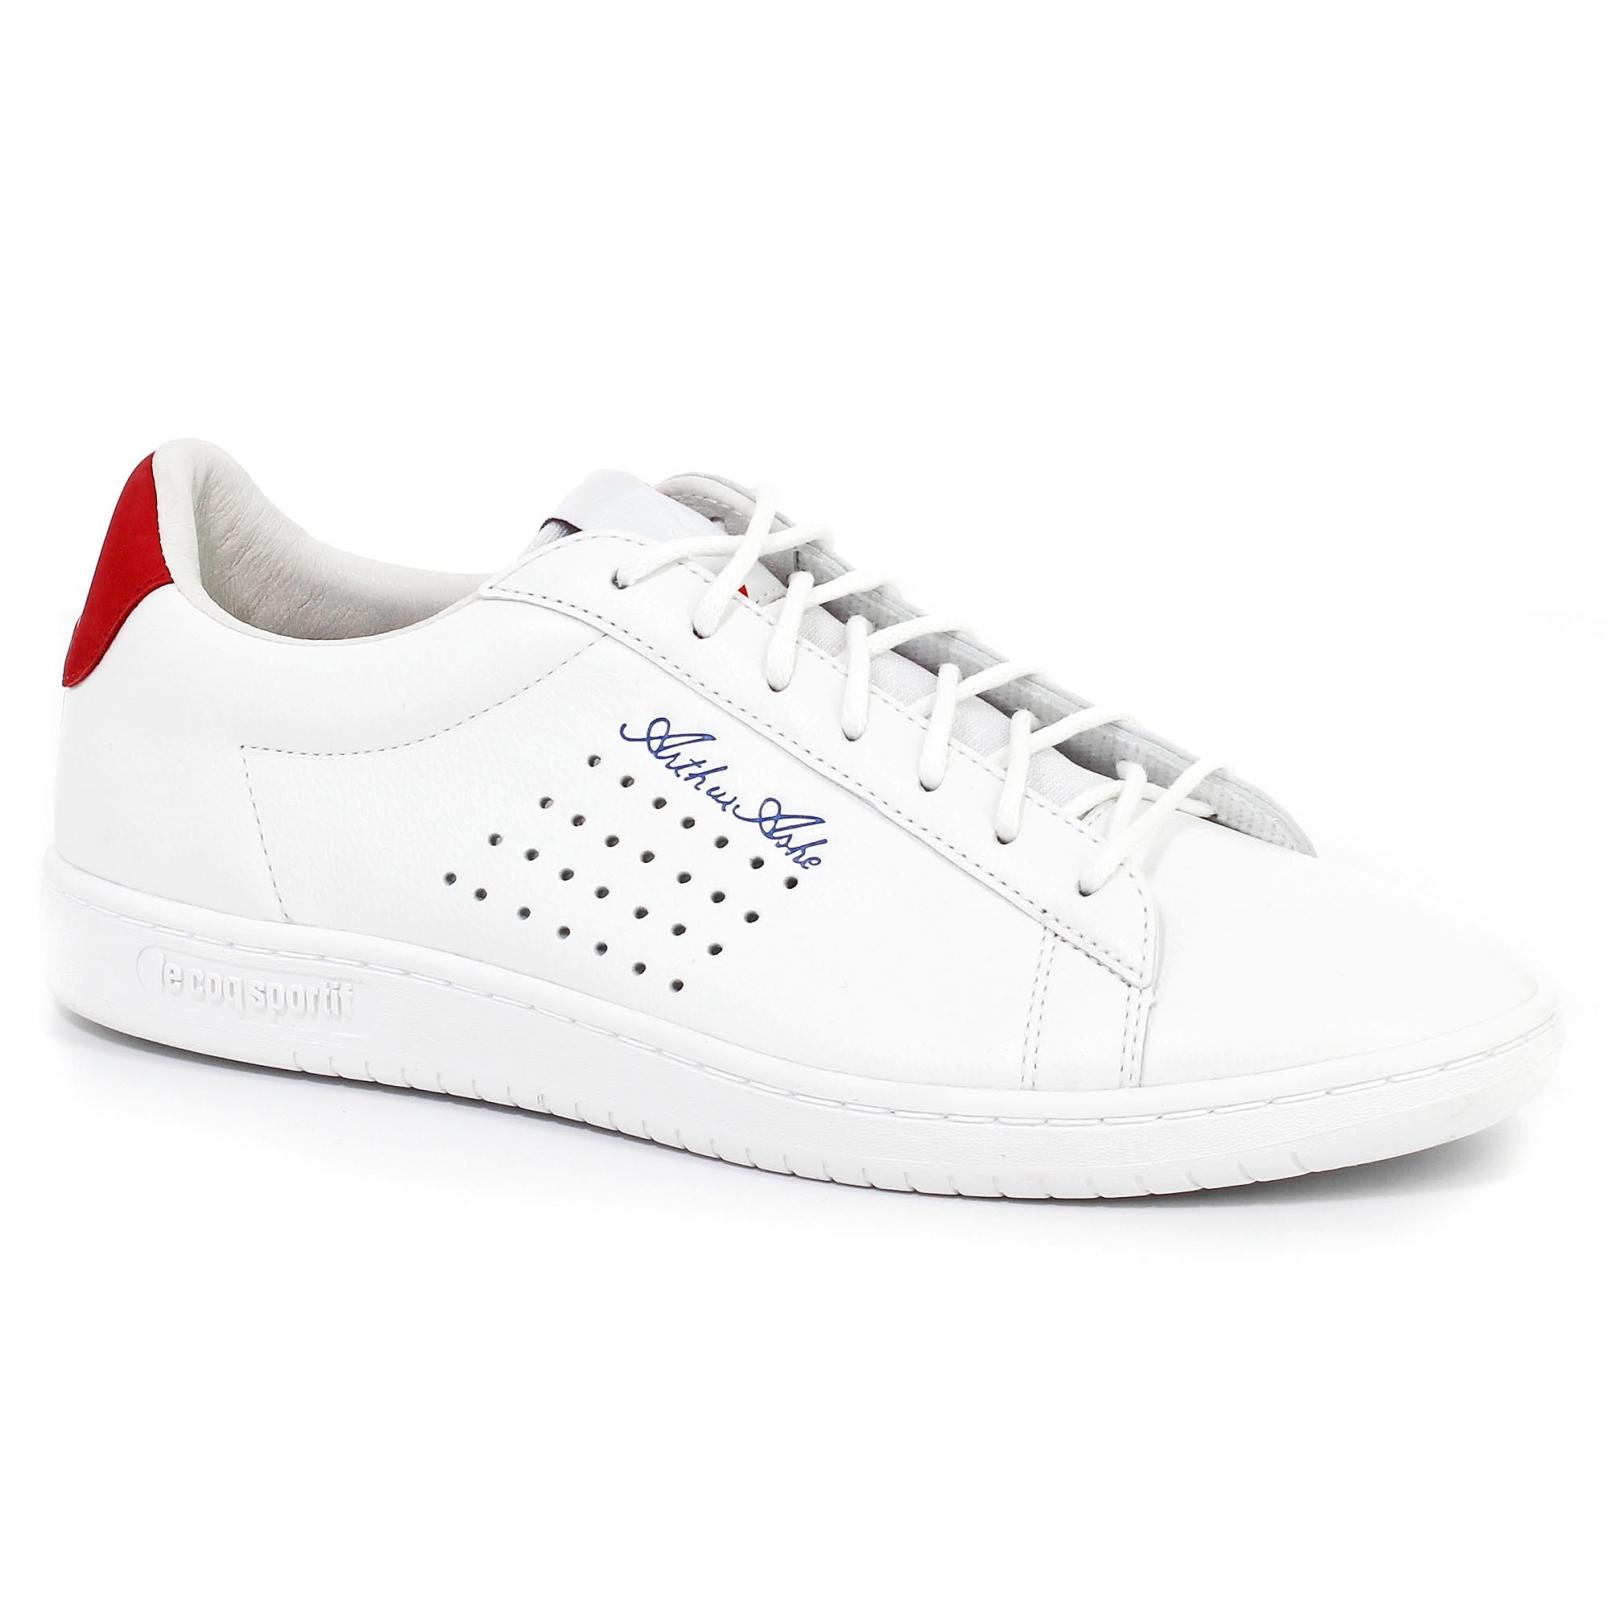 Shoes – Le Coq Sportif Arthur Ashe BBR White/Red